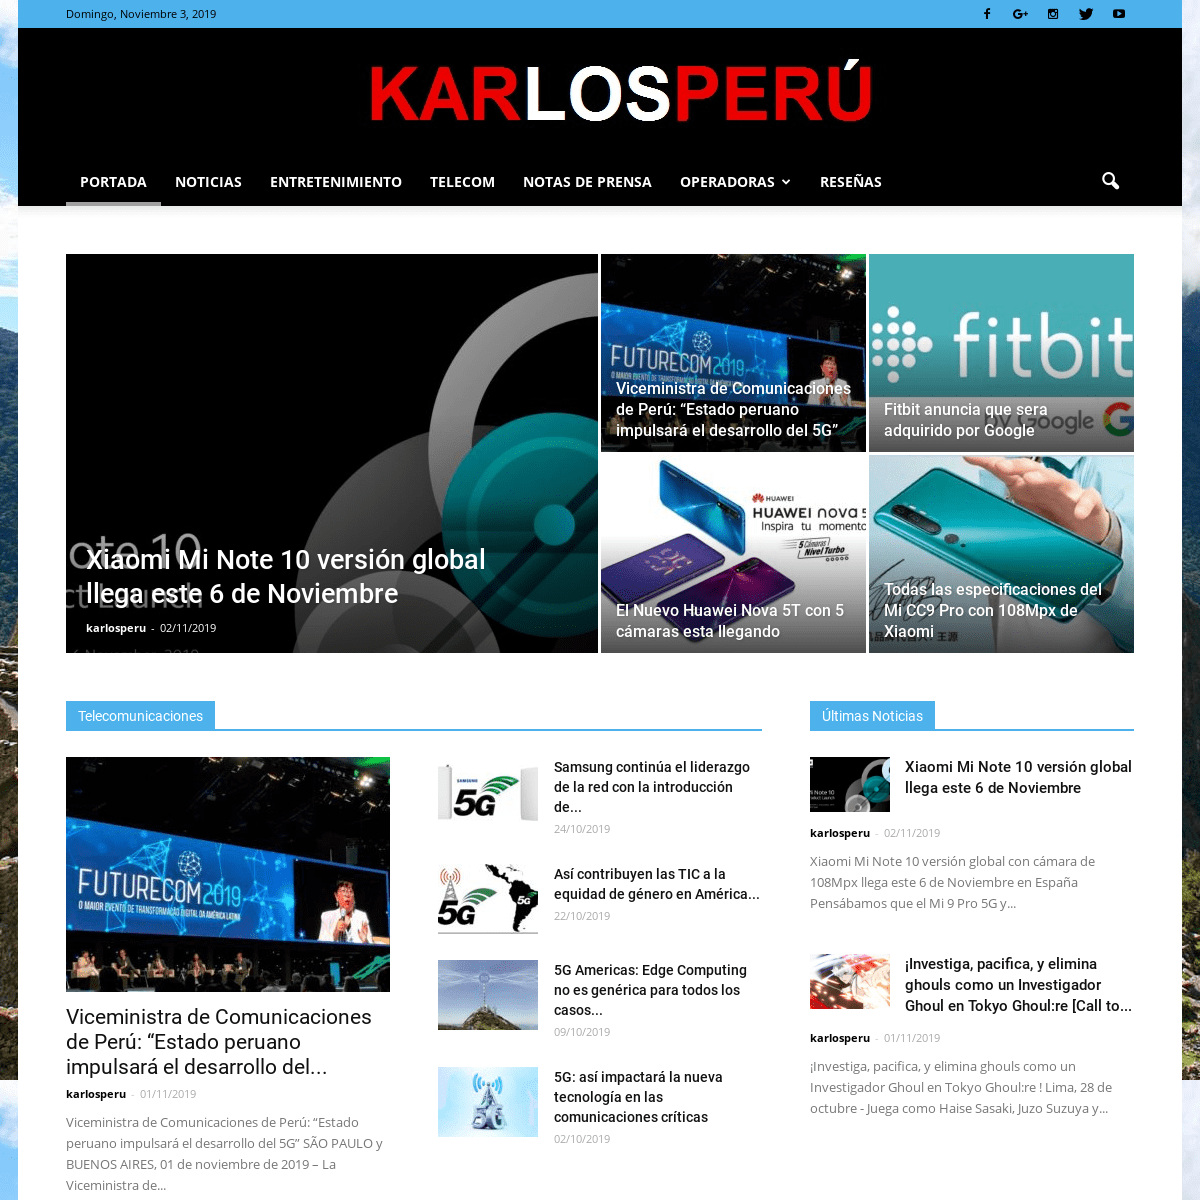 A complete backup of karlosperu.com